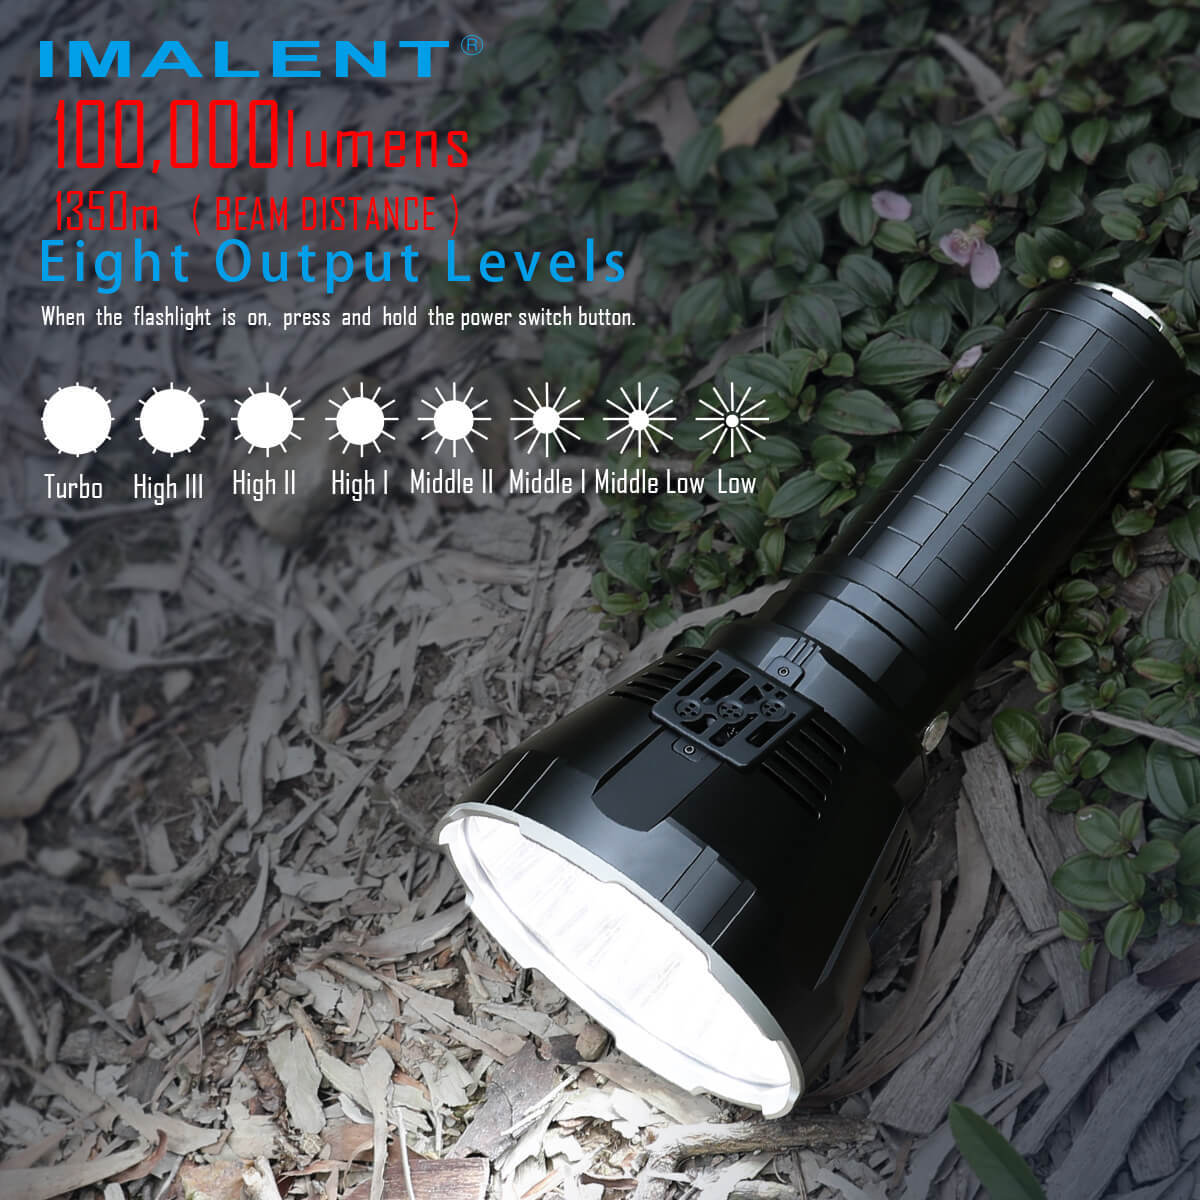 Imalent MS18 18 x  XHP70.2 100,000 Lumens Search Flashlight